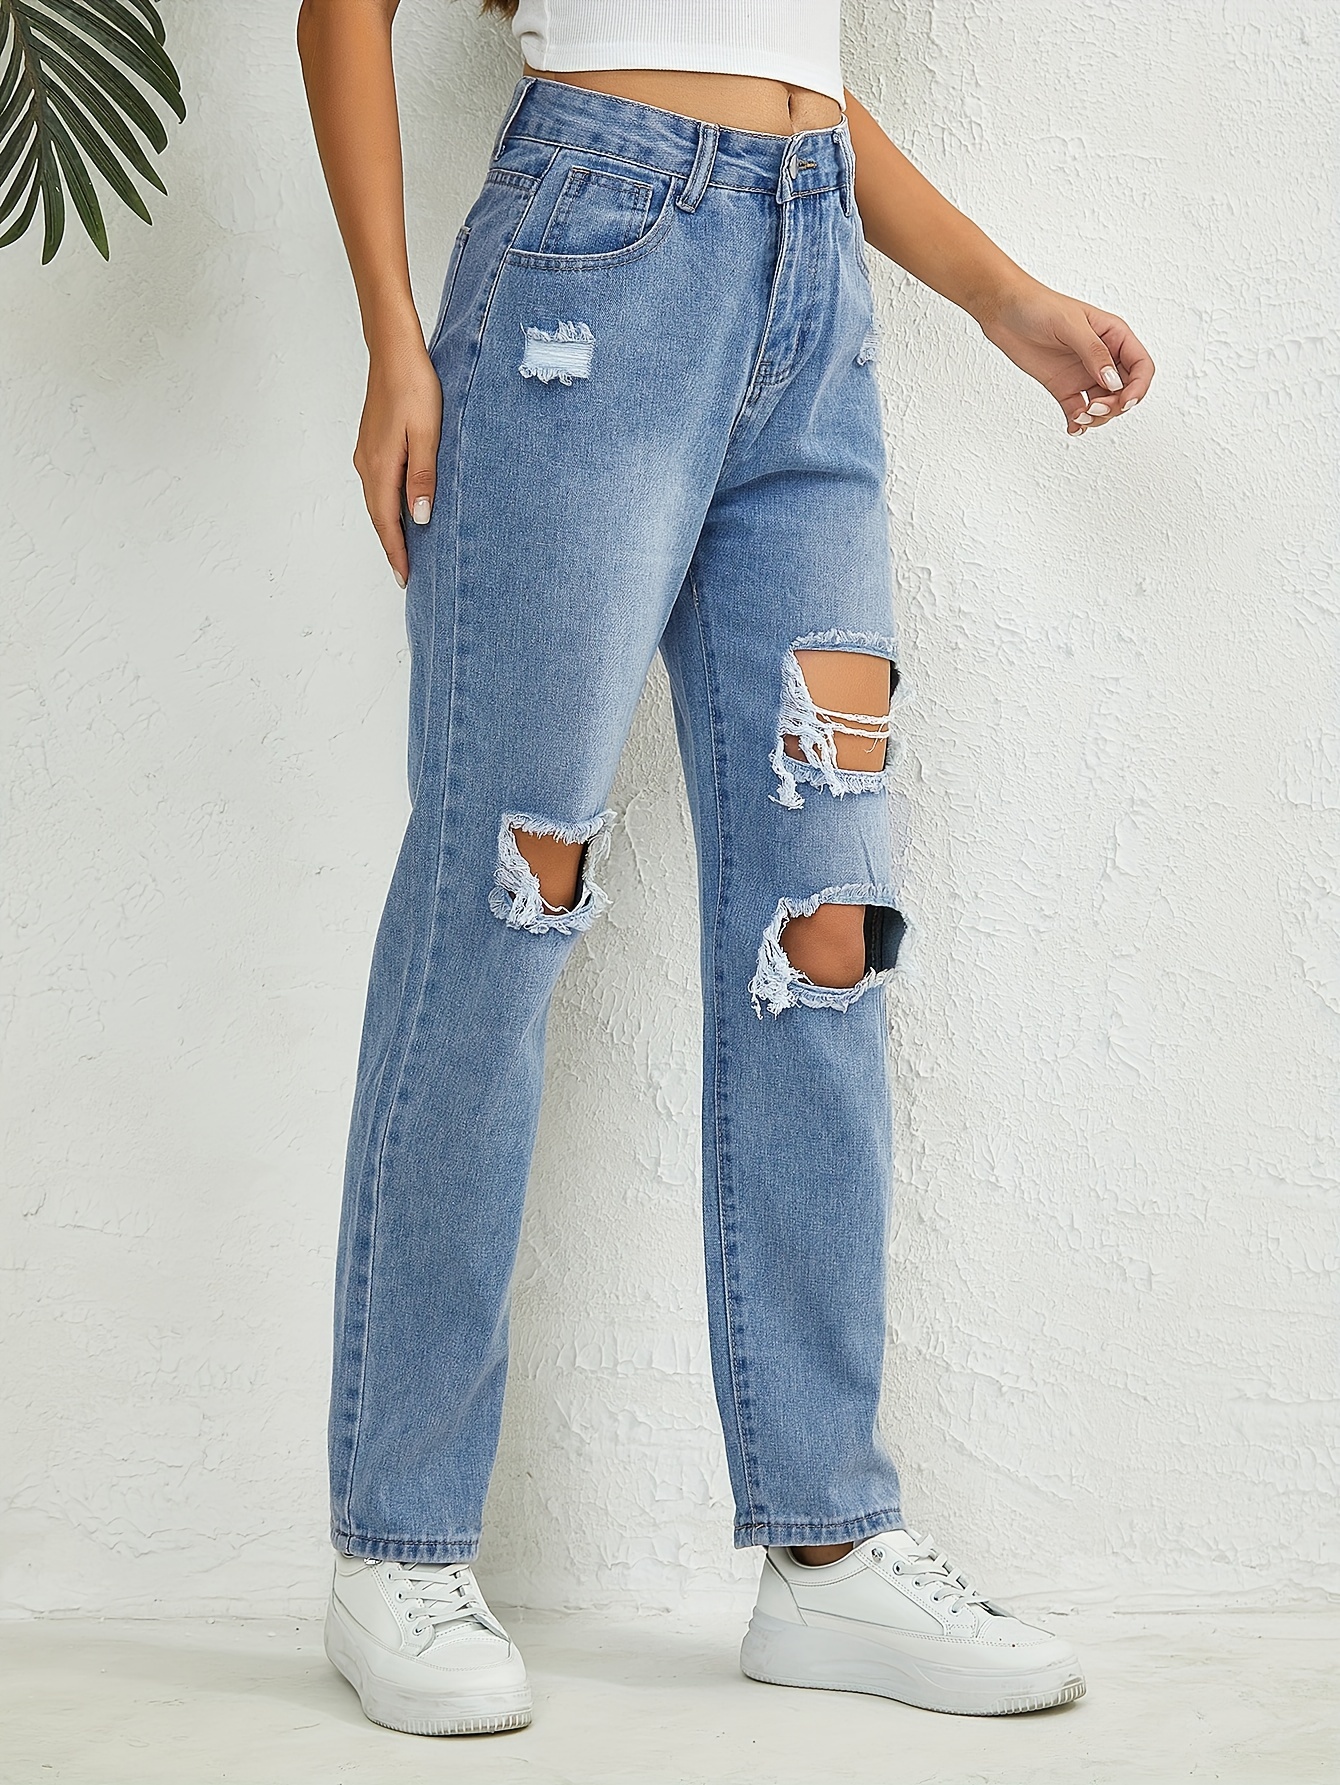 Fashion Women's Jeans/Pants High Waist Distressed High Elastic Women Jeans  On Zipper